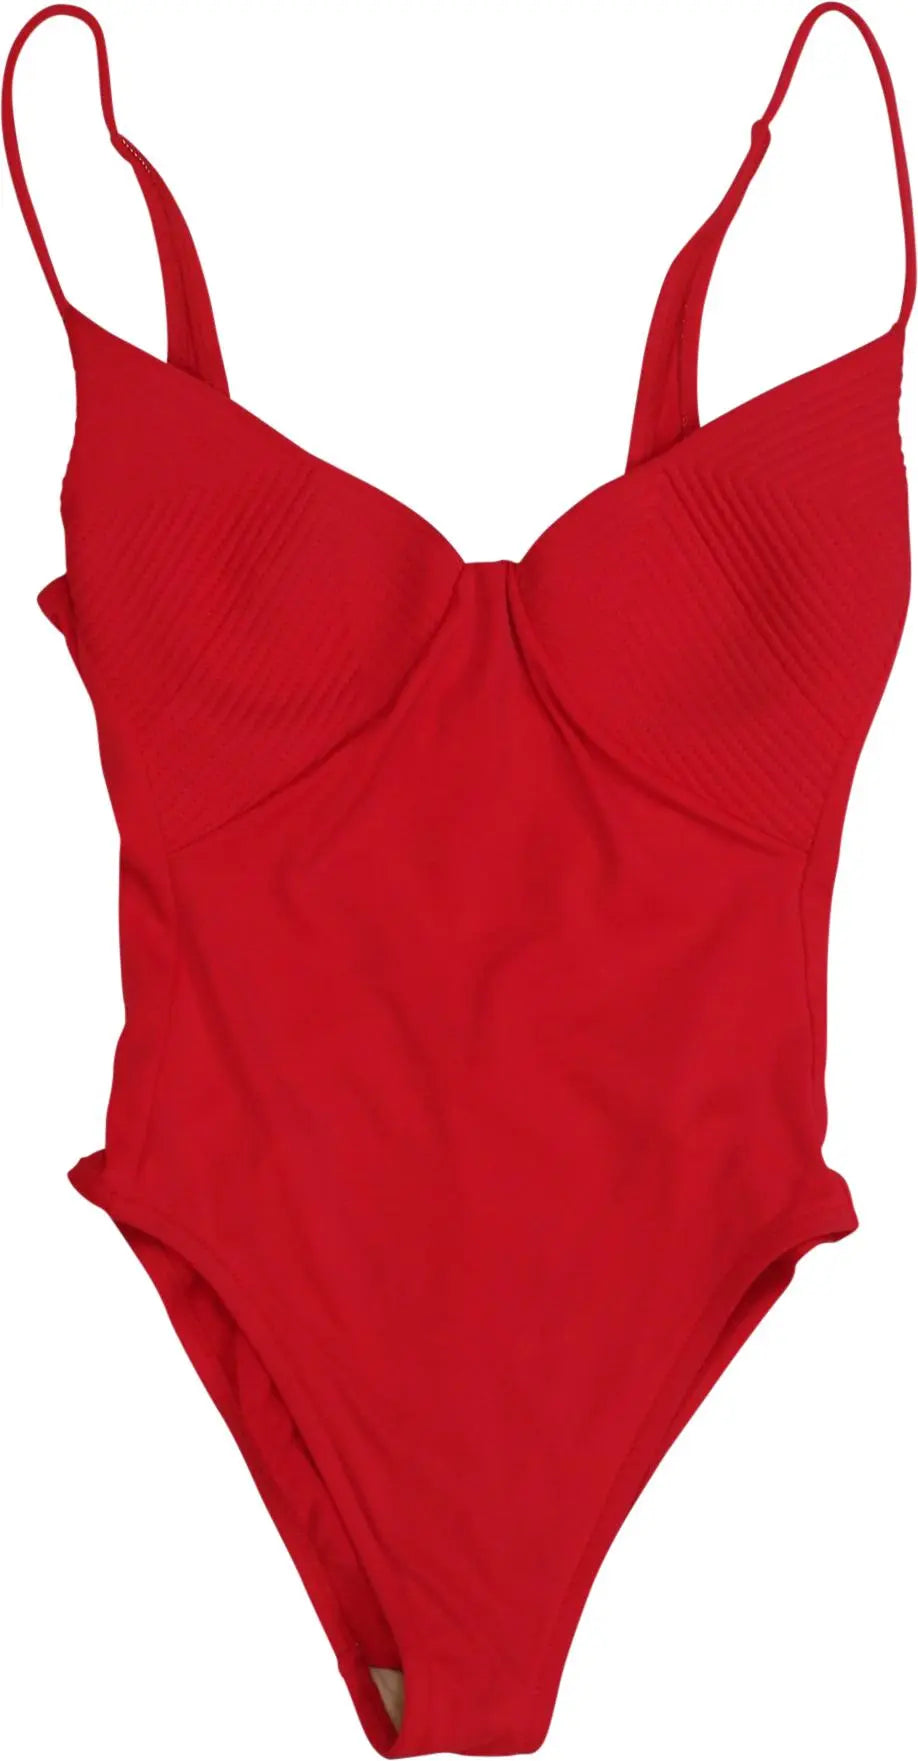 La Perla - Red Swimsuit by La Perla- ThriftTale.com - Vintage and second handclothing